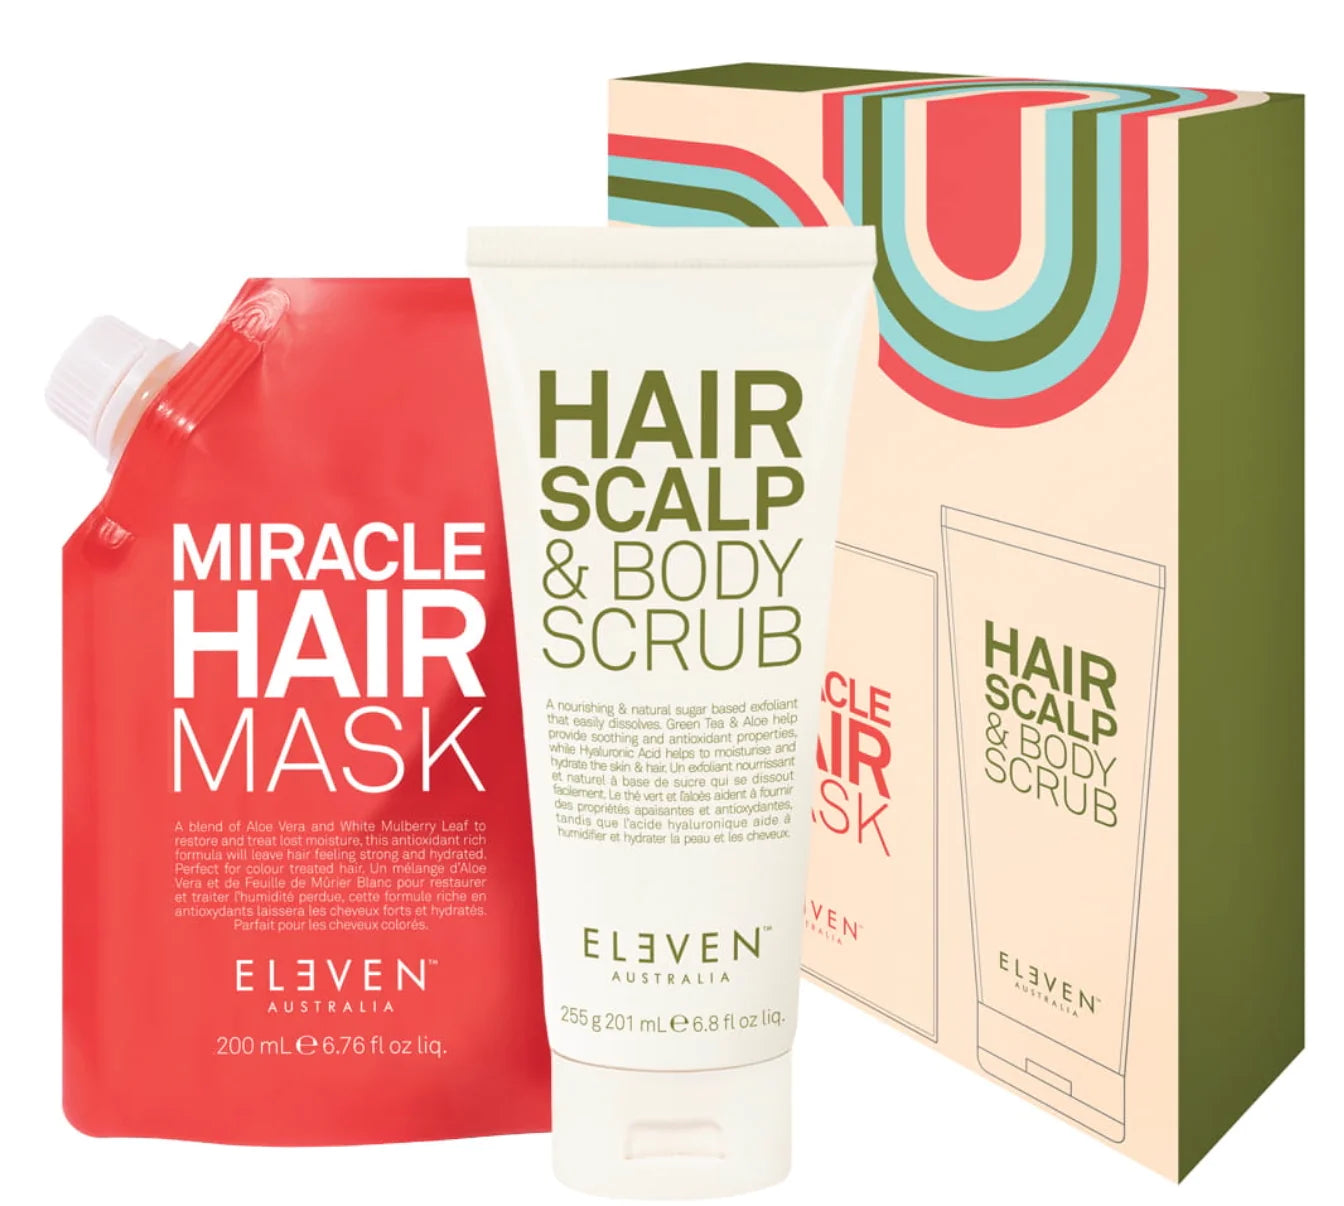 ELEVEN AUSTRALIA Miracle Hair Mask & Scalp Bundle